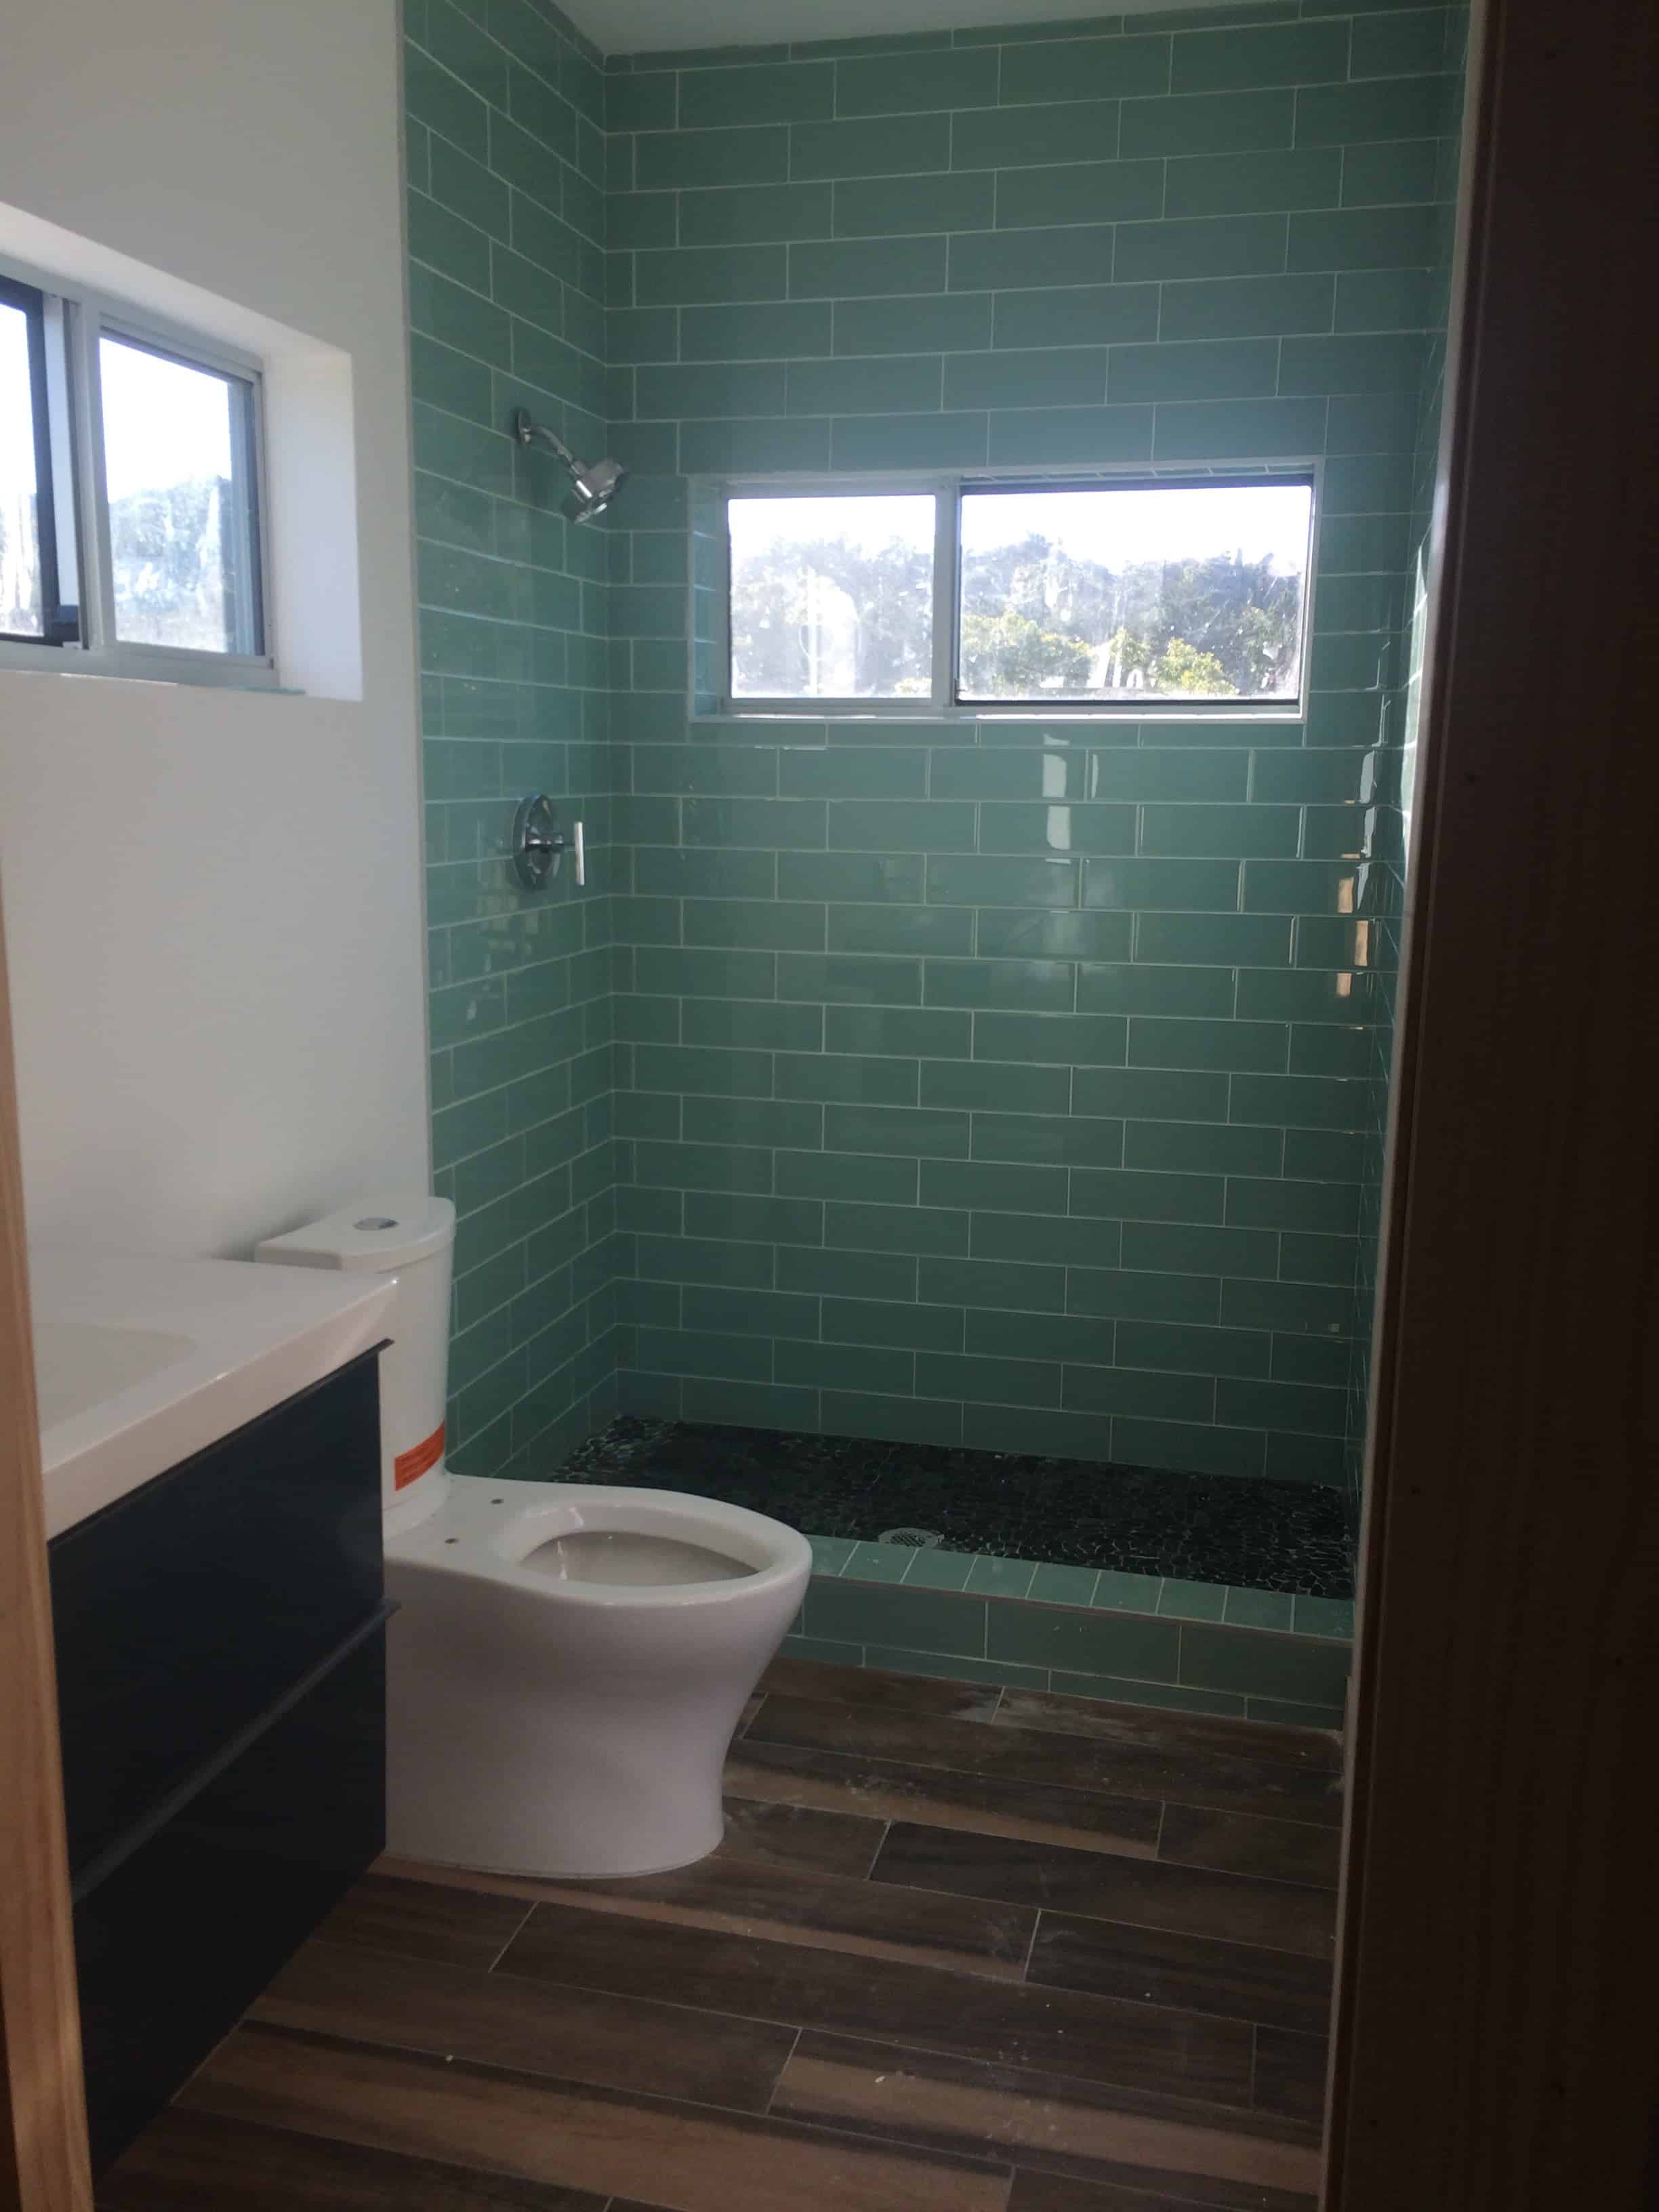 MA Modular Grand-Ma modern prefab home bathroom.